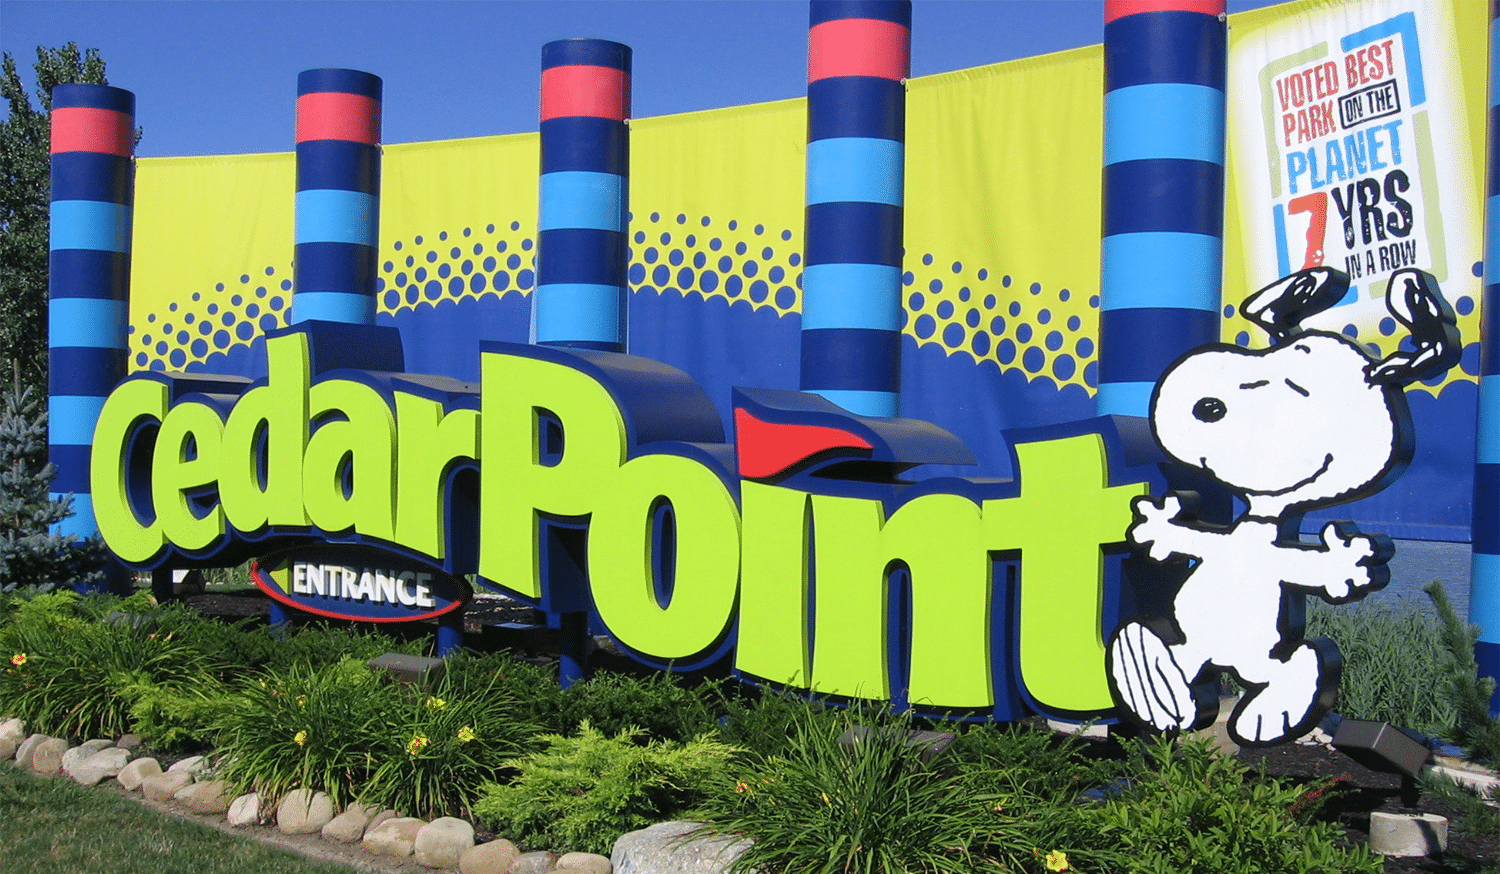 horizontal image of the entrance to Cedar Point Amusement Park